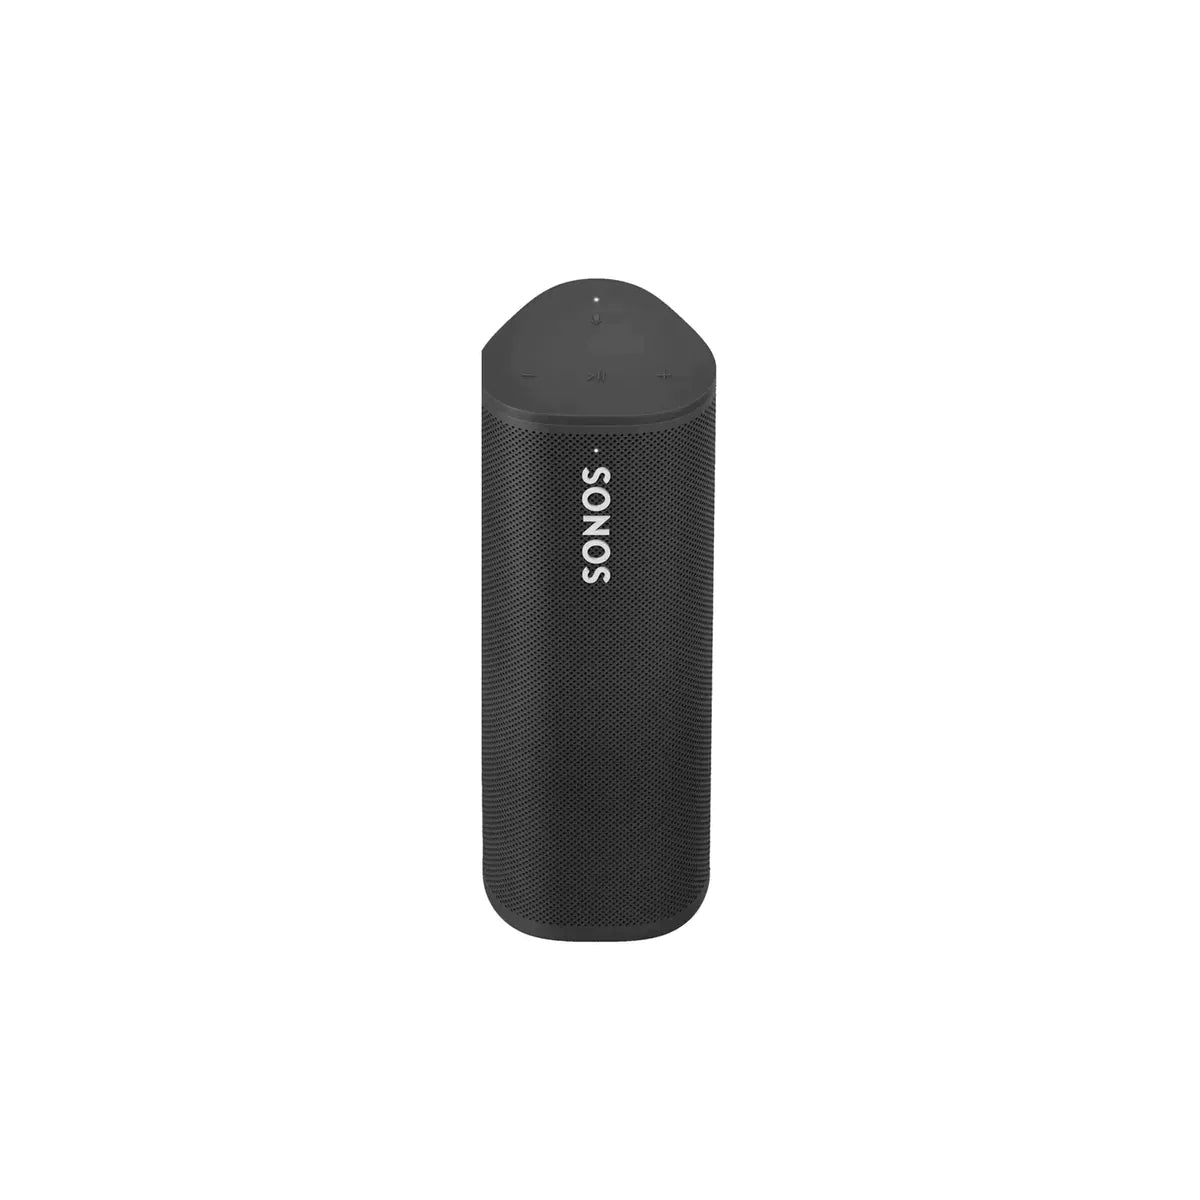 Sonos Roam Smart Speaker with Voice Control - Black - Refurbished Good